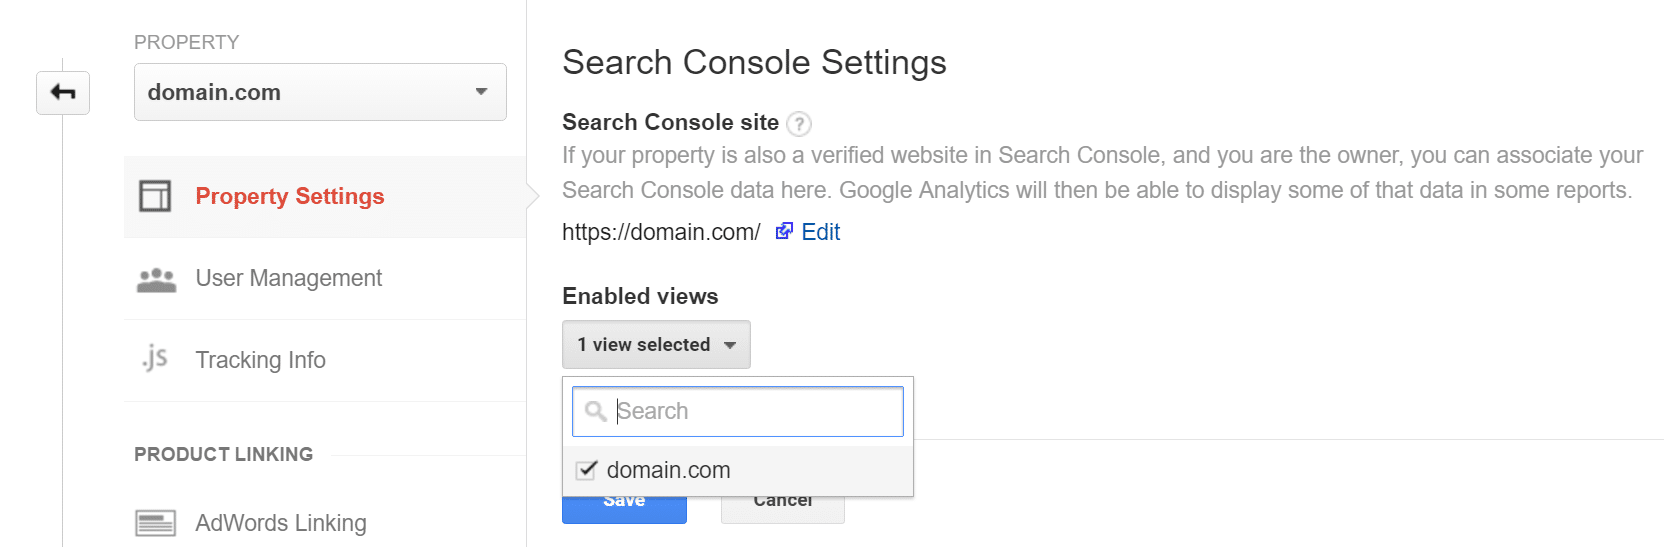 lien google analytics search console